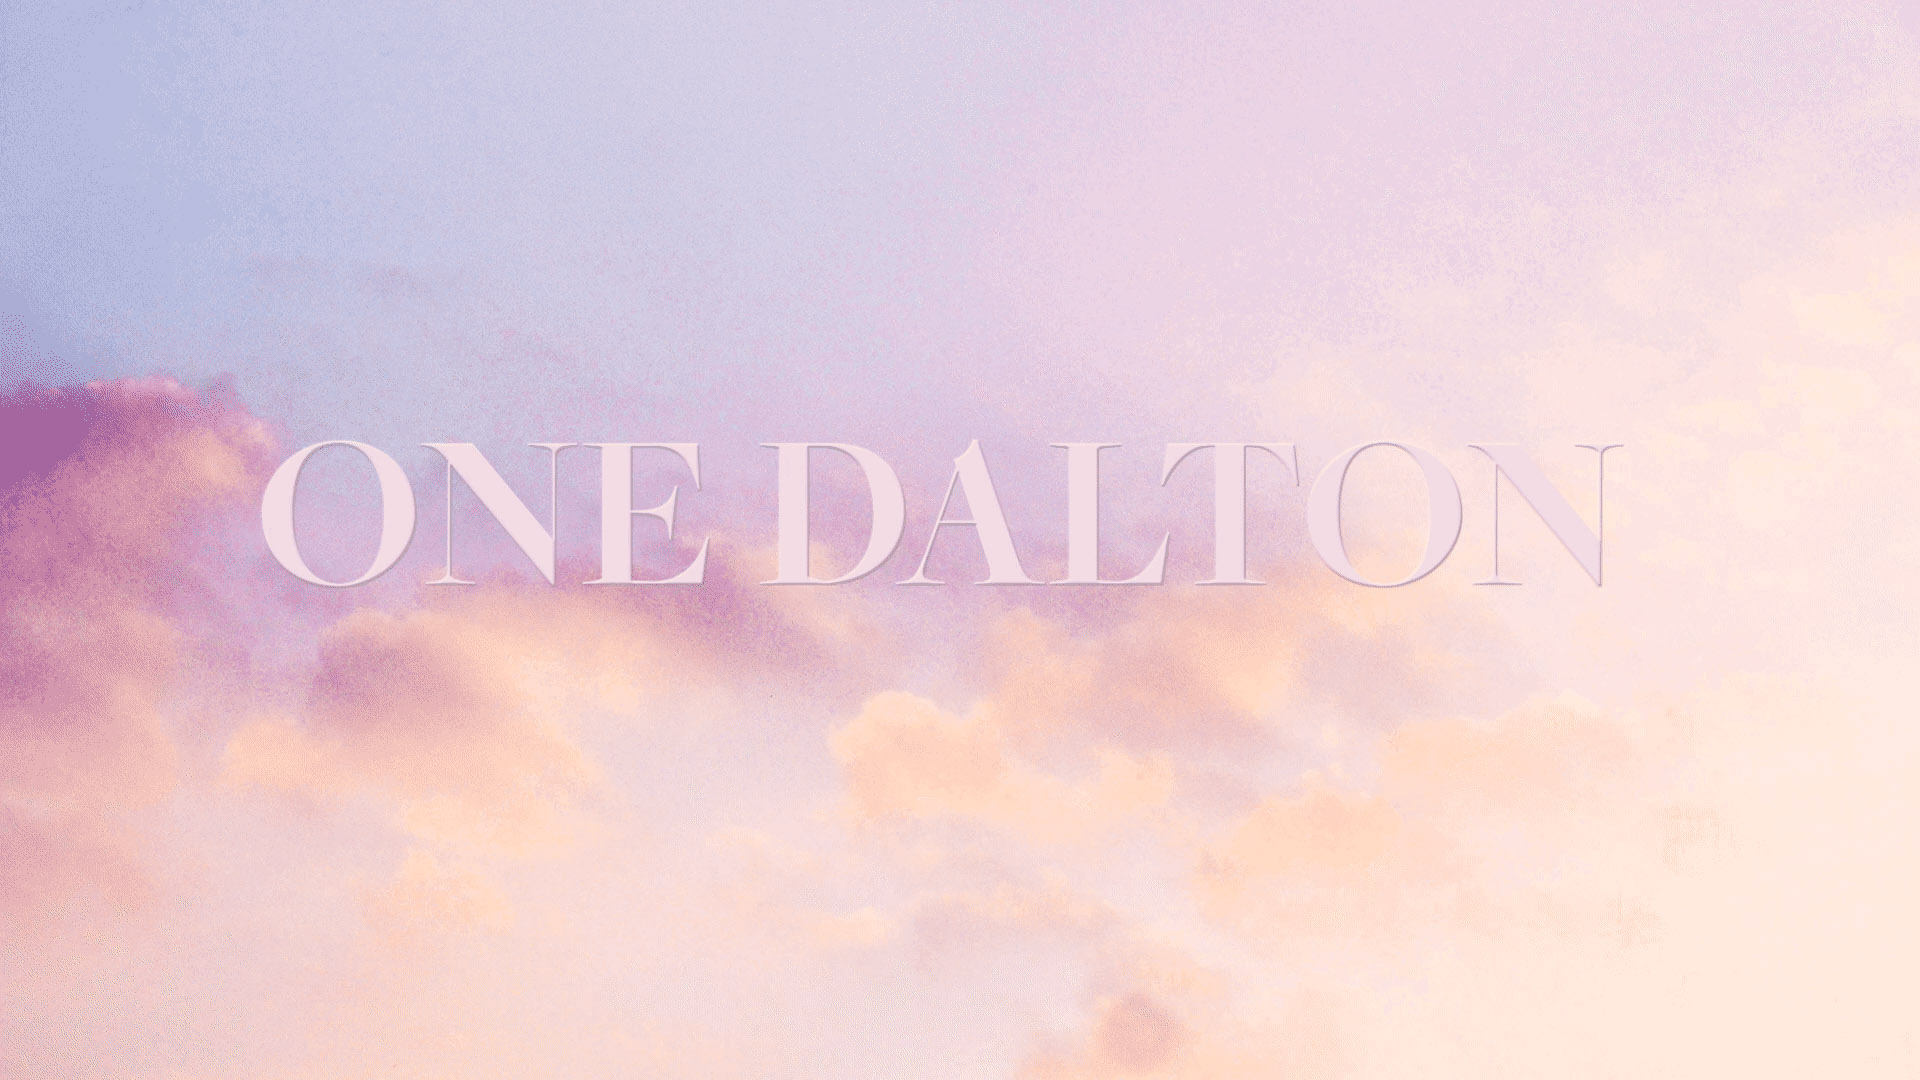 One Dalton